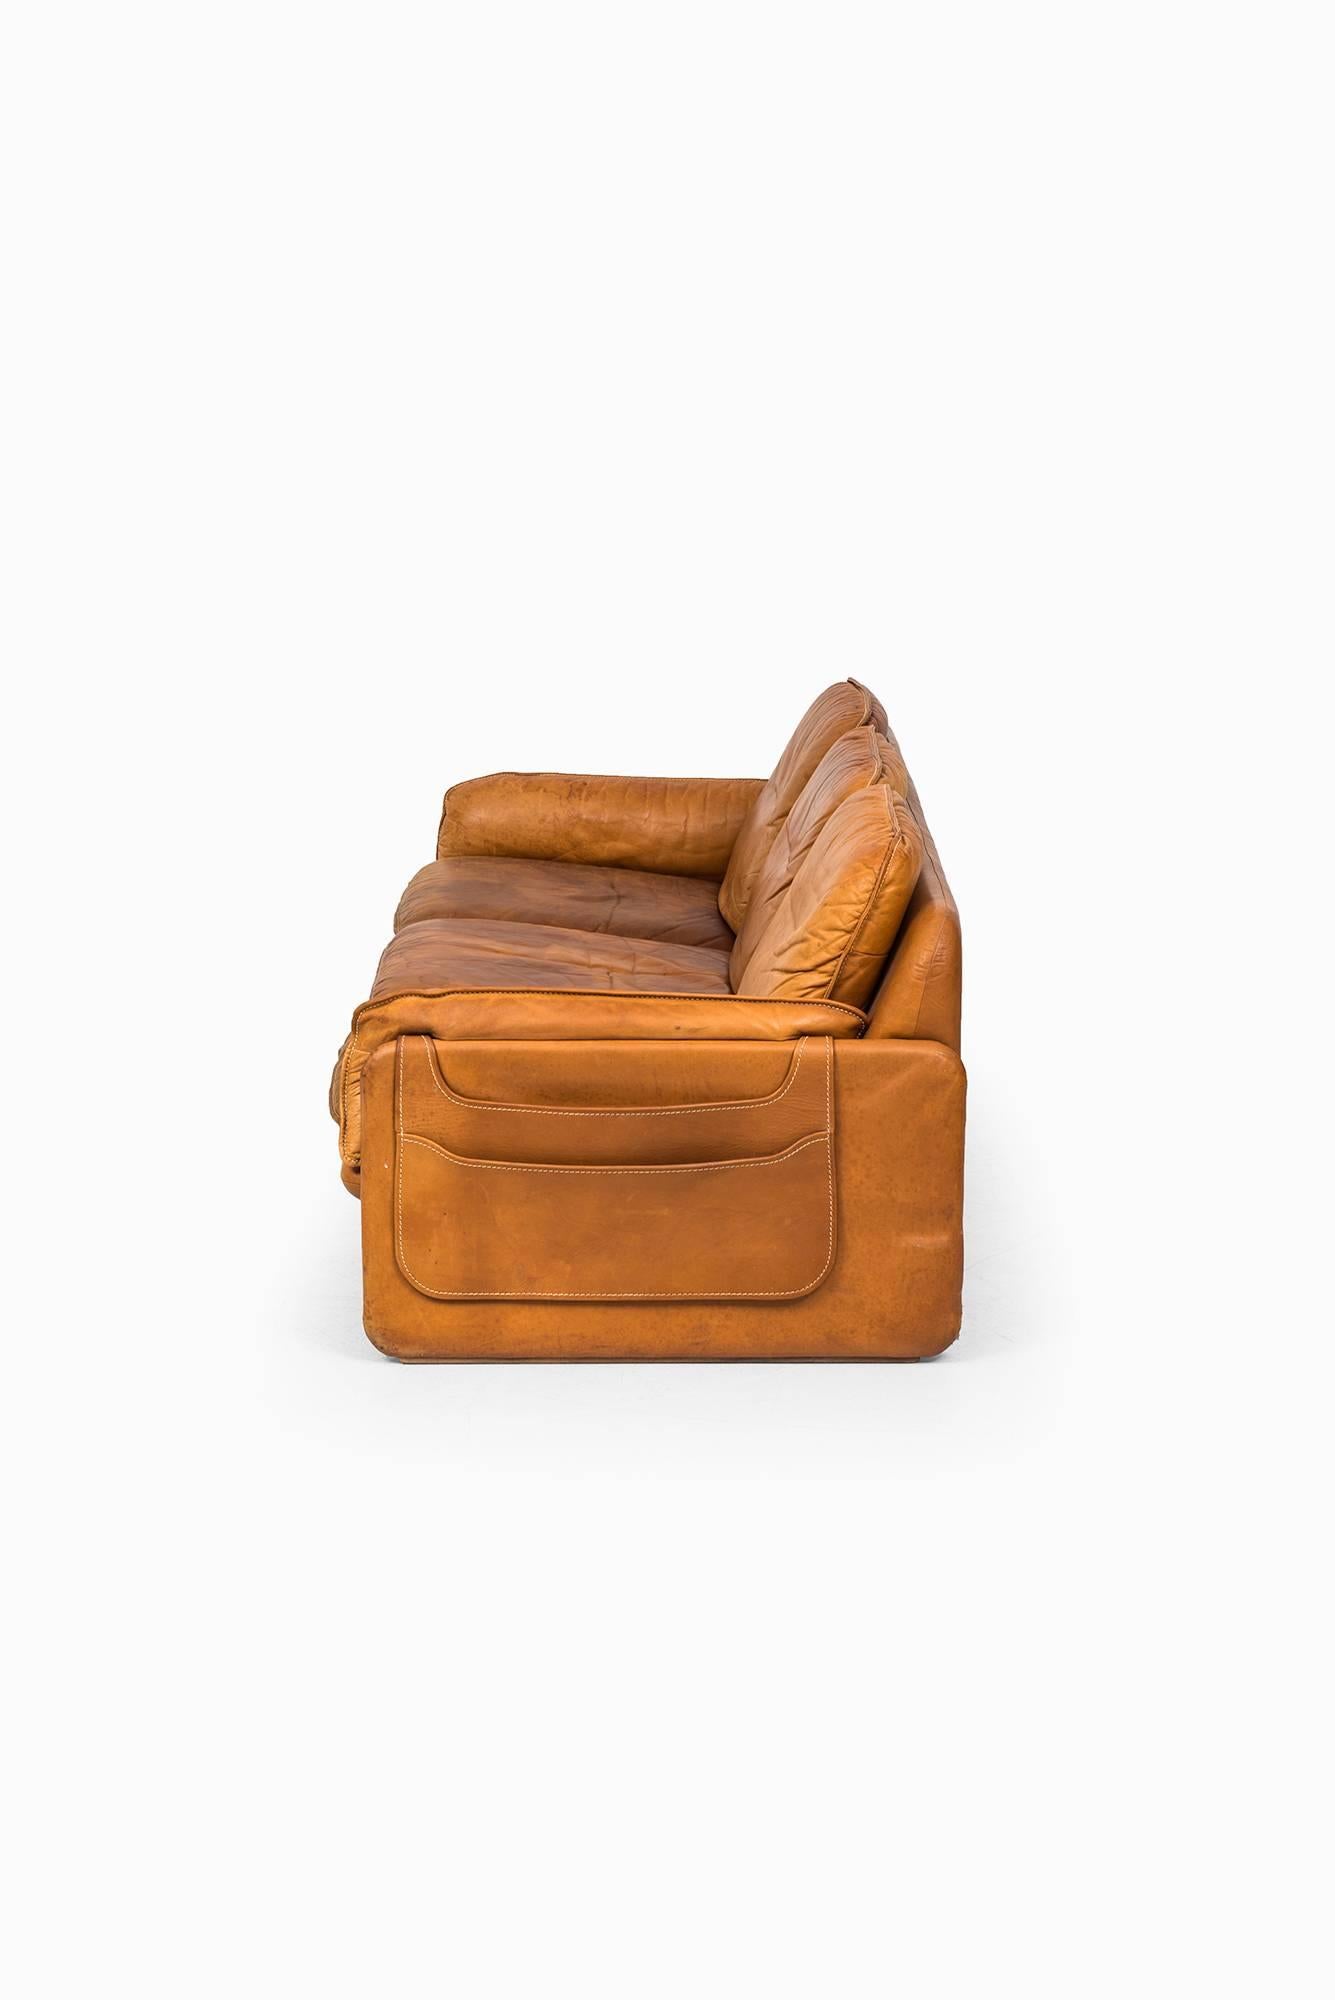 Cognac Brown Sofa Produced by De Sede in Switzerland (Mitte des 20. Jahrhunderts)